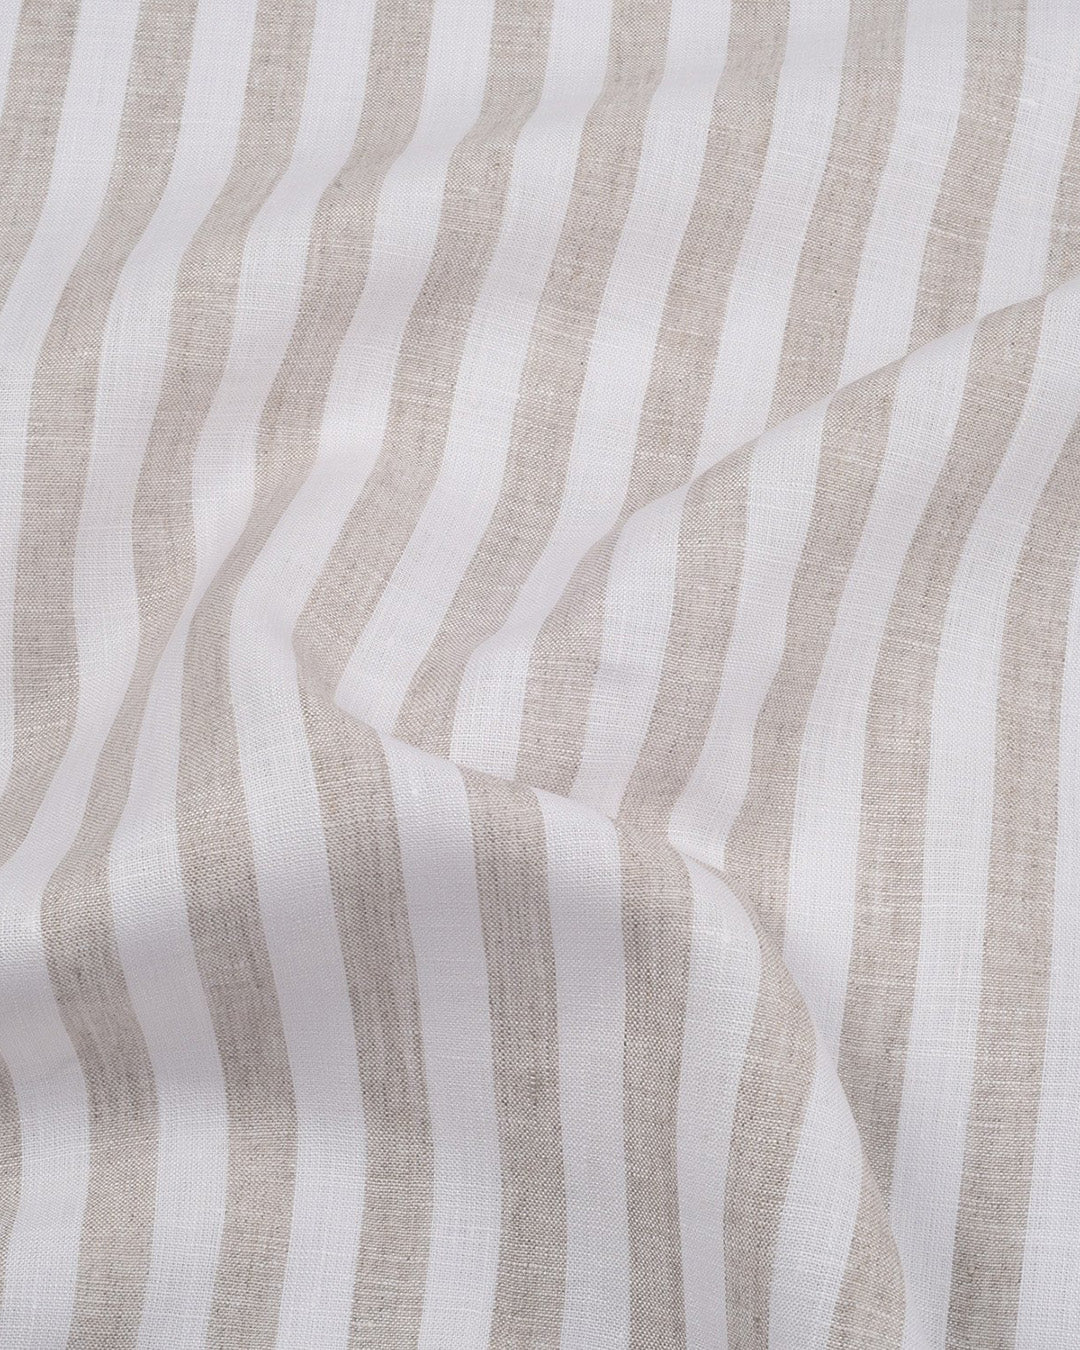 Summer Shirt in Sand White Awning Stripes Linen PRESET STYLE